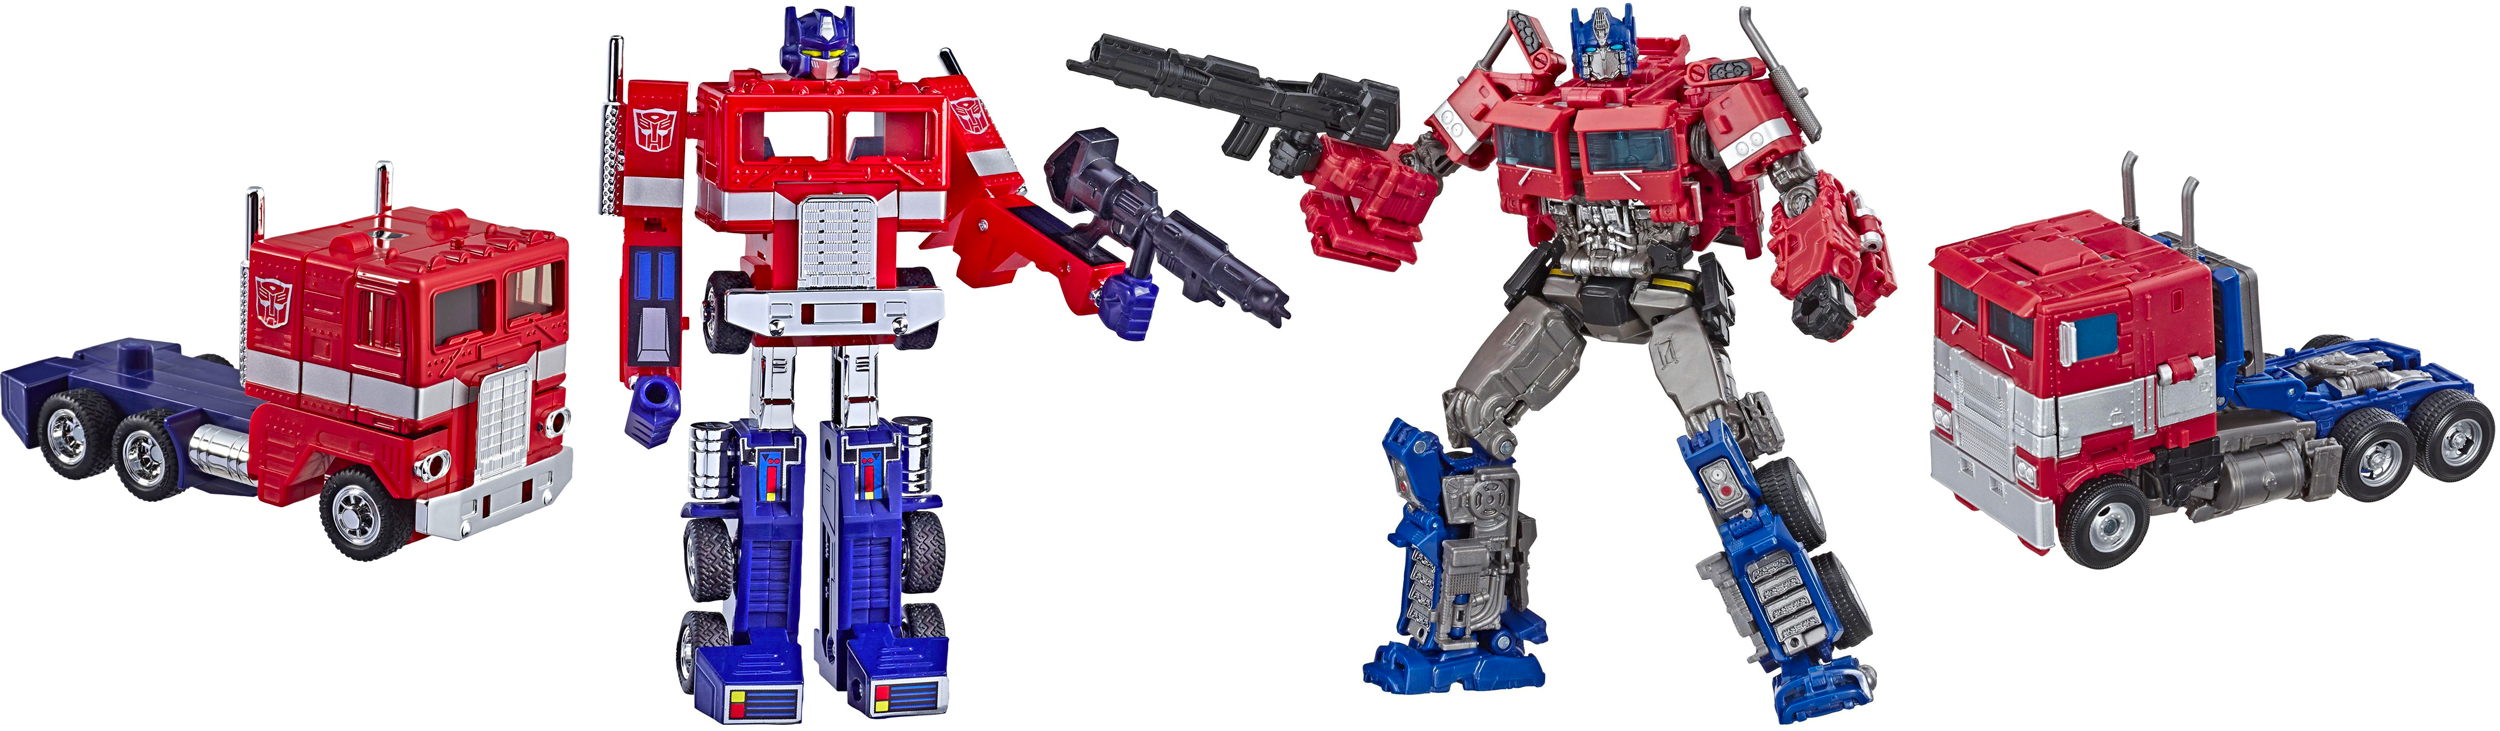 Hasbro's original Transformers G1 Optimus Prime figure (re-issue) (Left) compared to its Transformers Studio Series Voyager Class Optimus Prime figure. (Right) (Image: Hasbro)